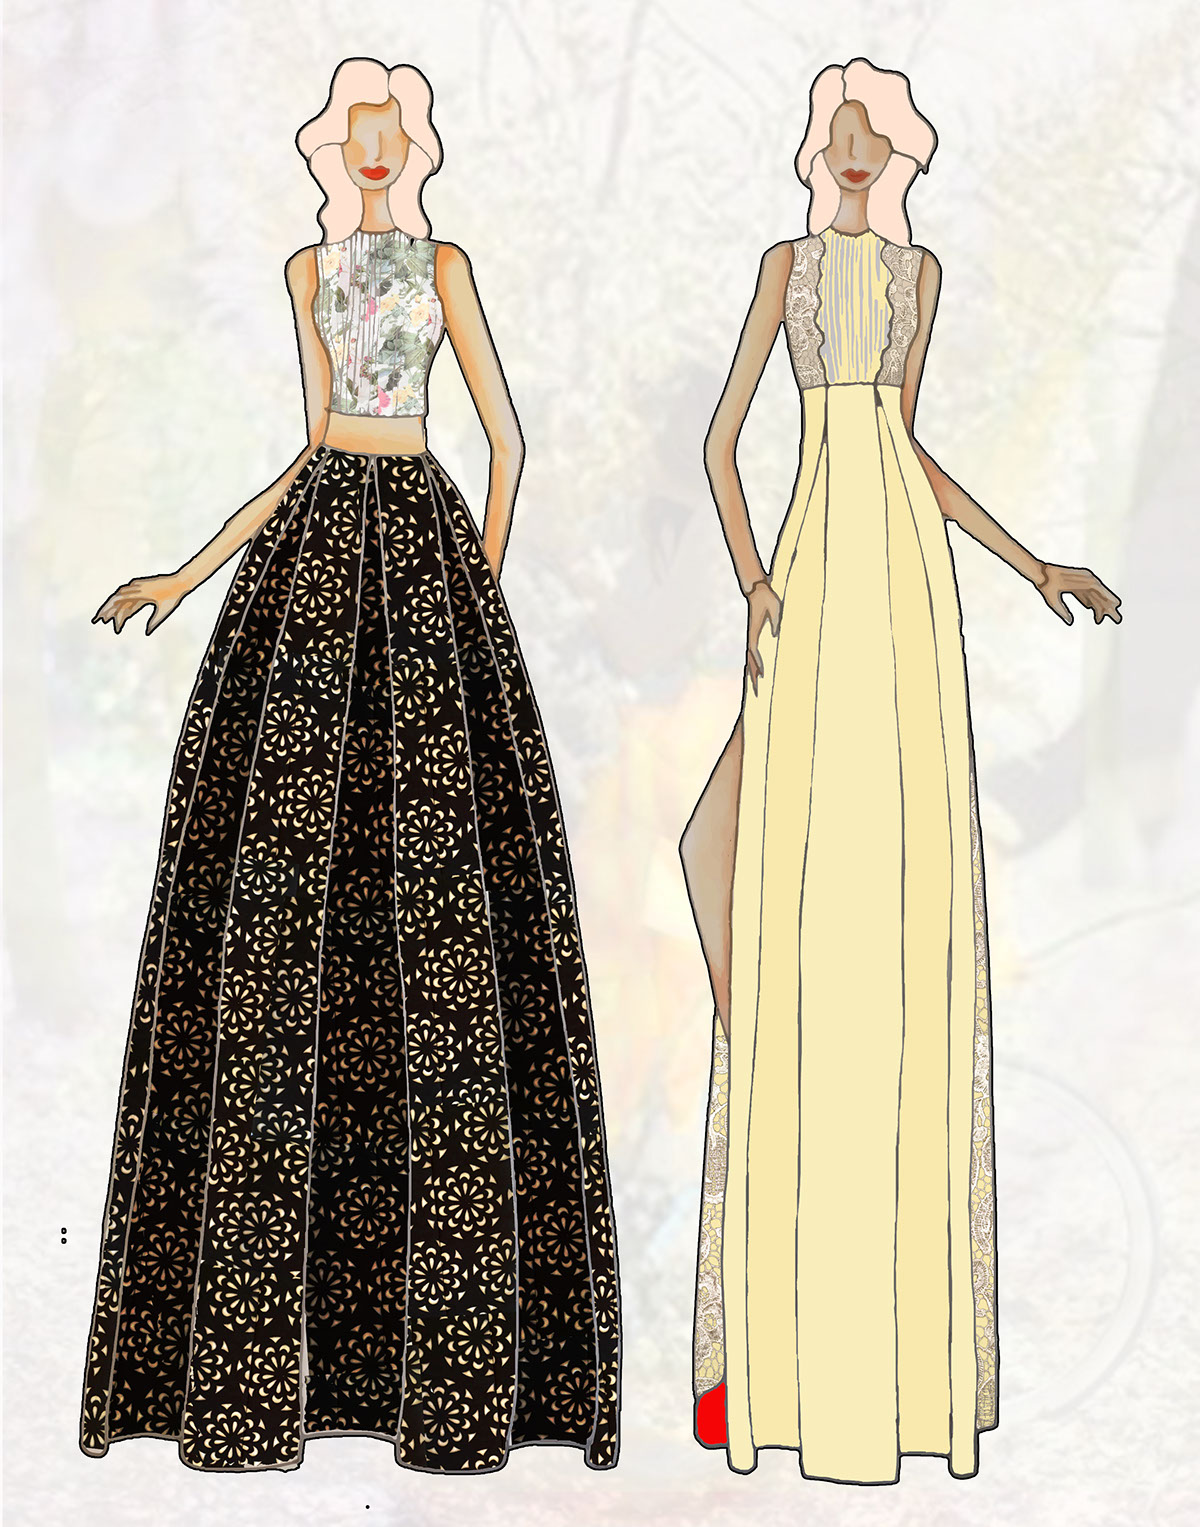 fashiondesign illustration textiledesign